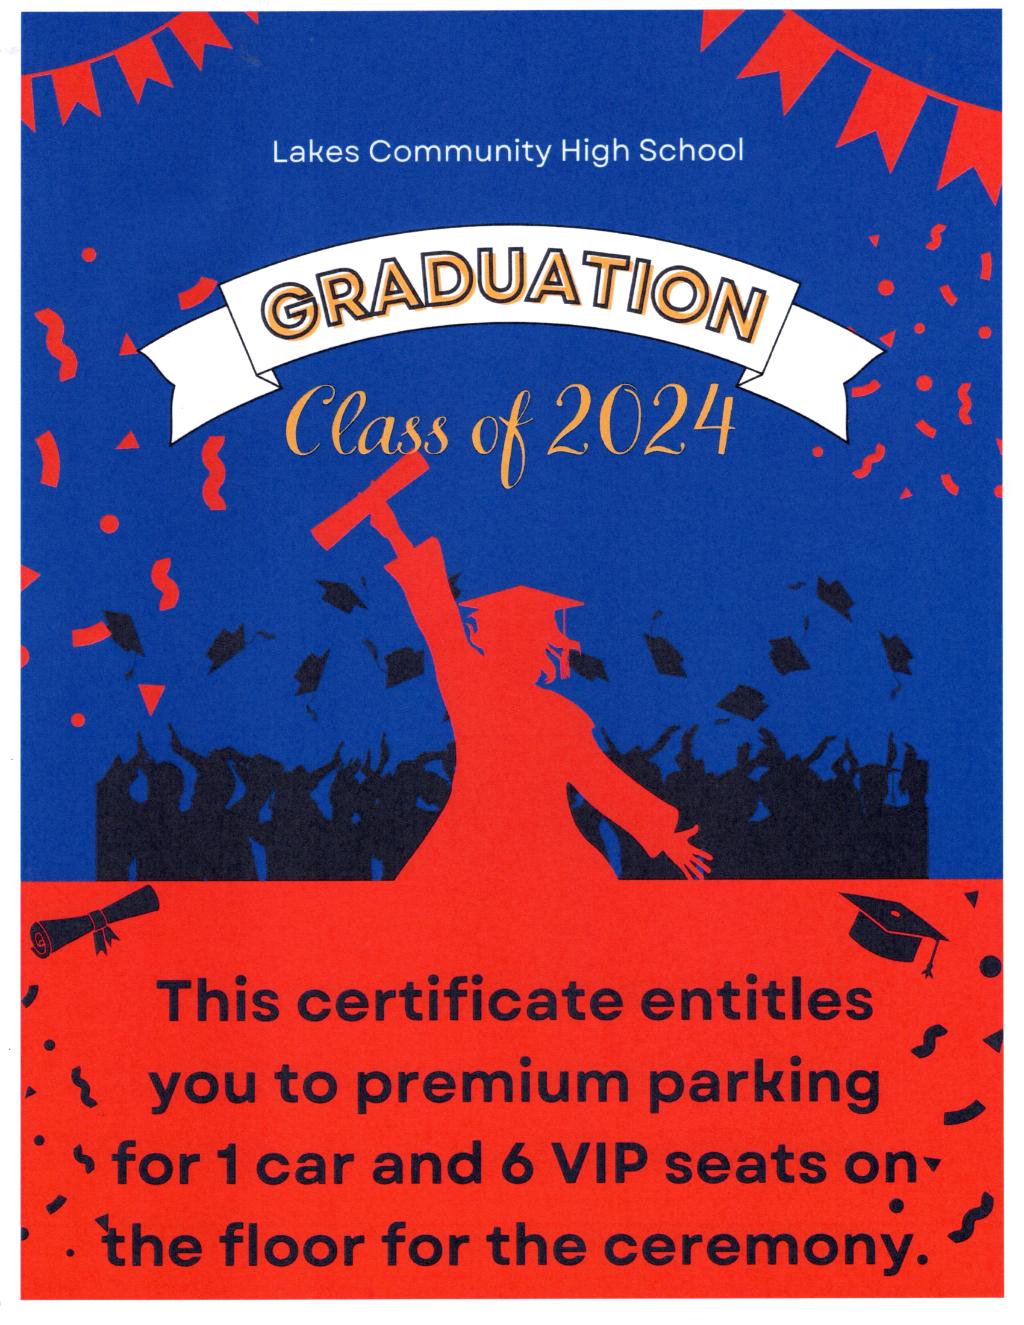 6 VIP Class of 2024 Graduation Seats+Premium Parking